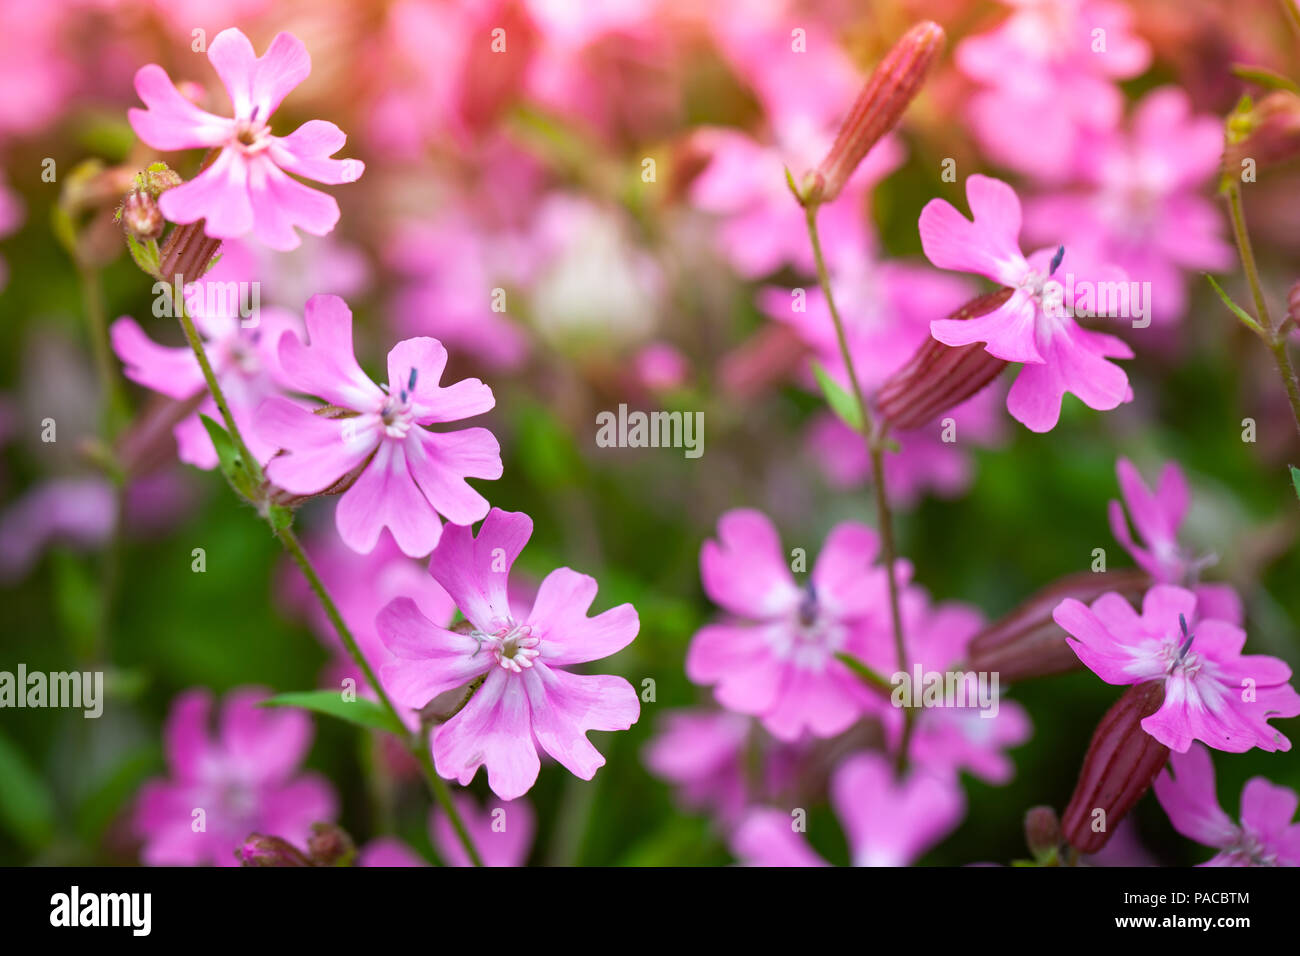 Phlox subulata or Creeping Phlox. Pink flowers close-up photo with selective focus Stock Photo